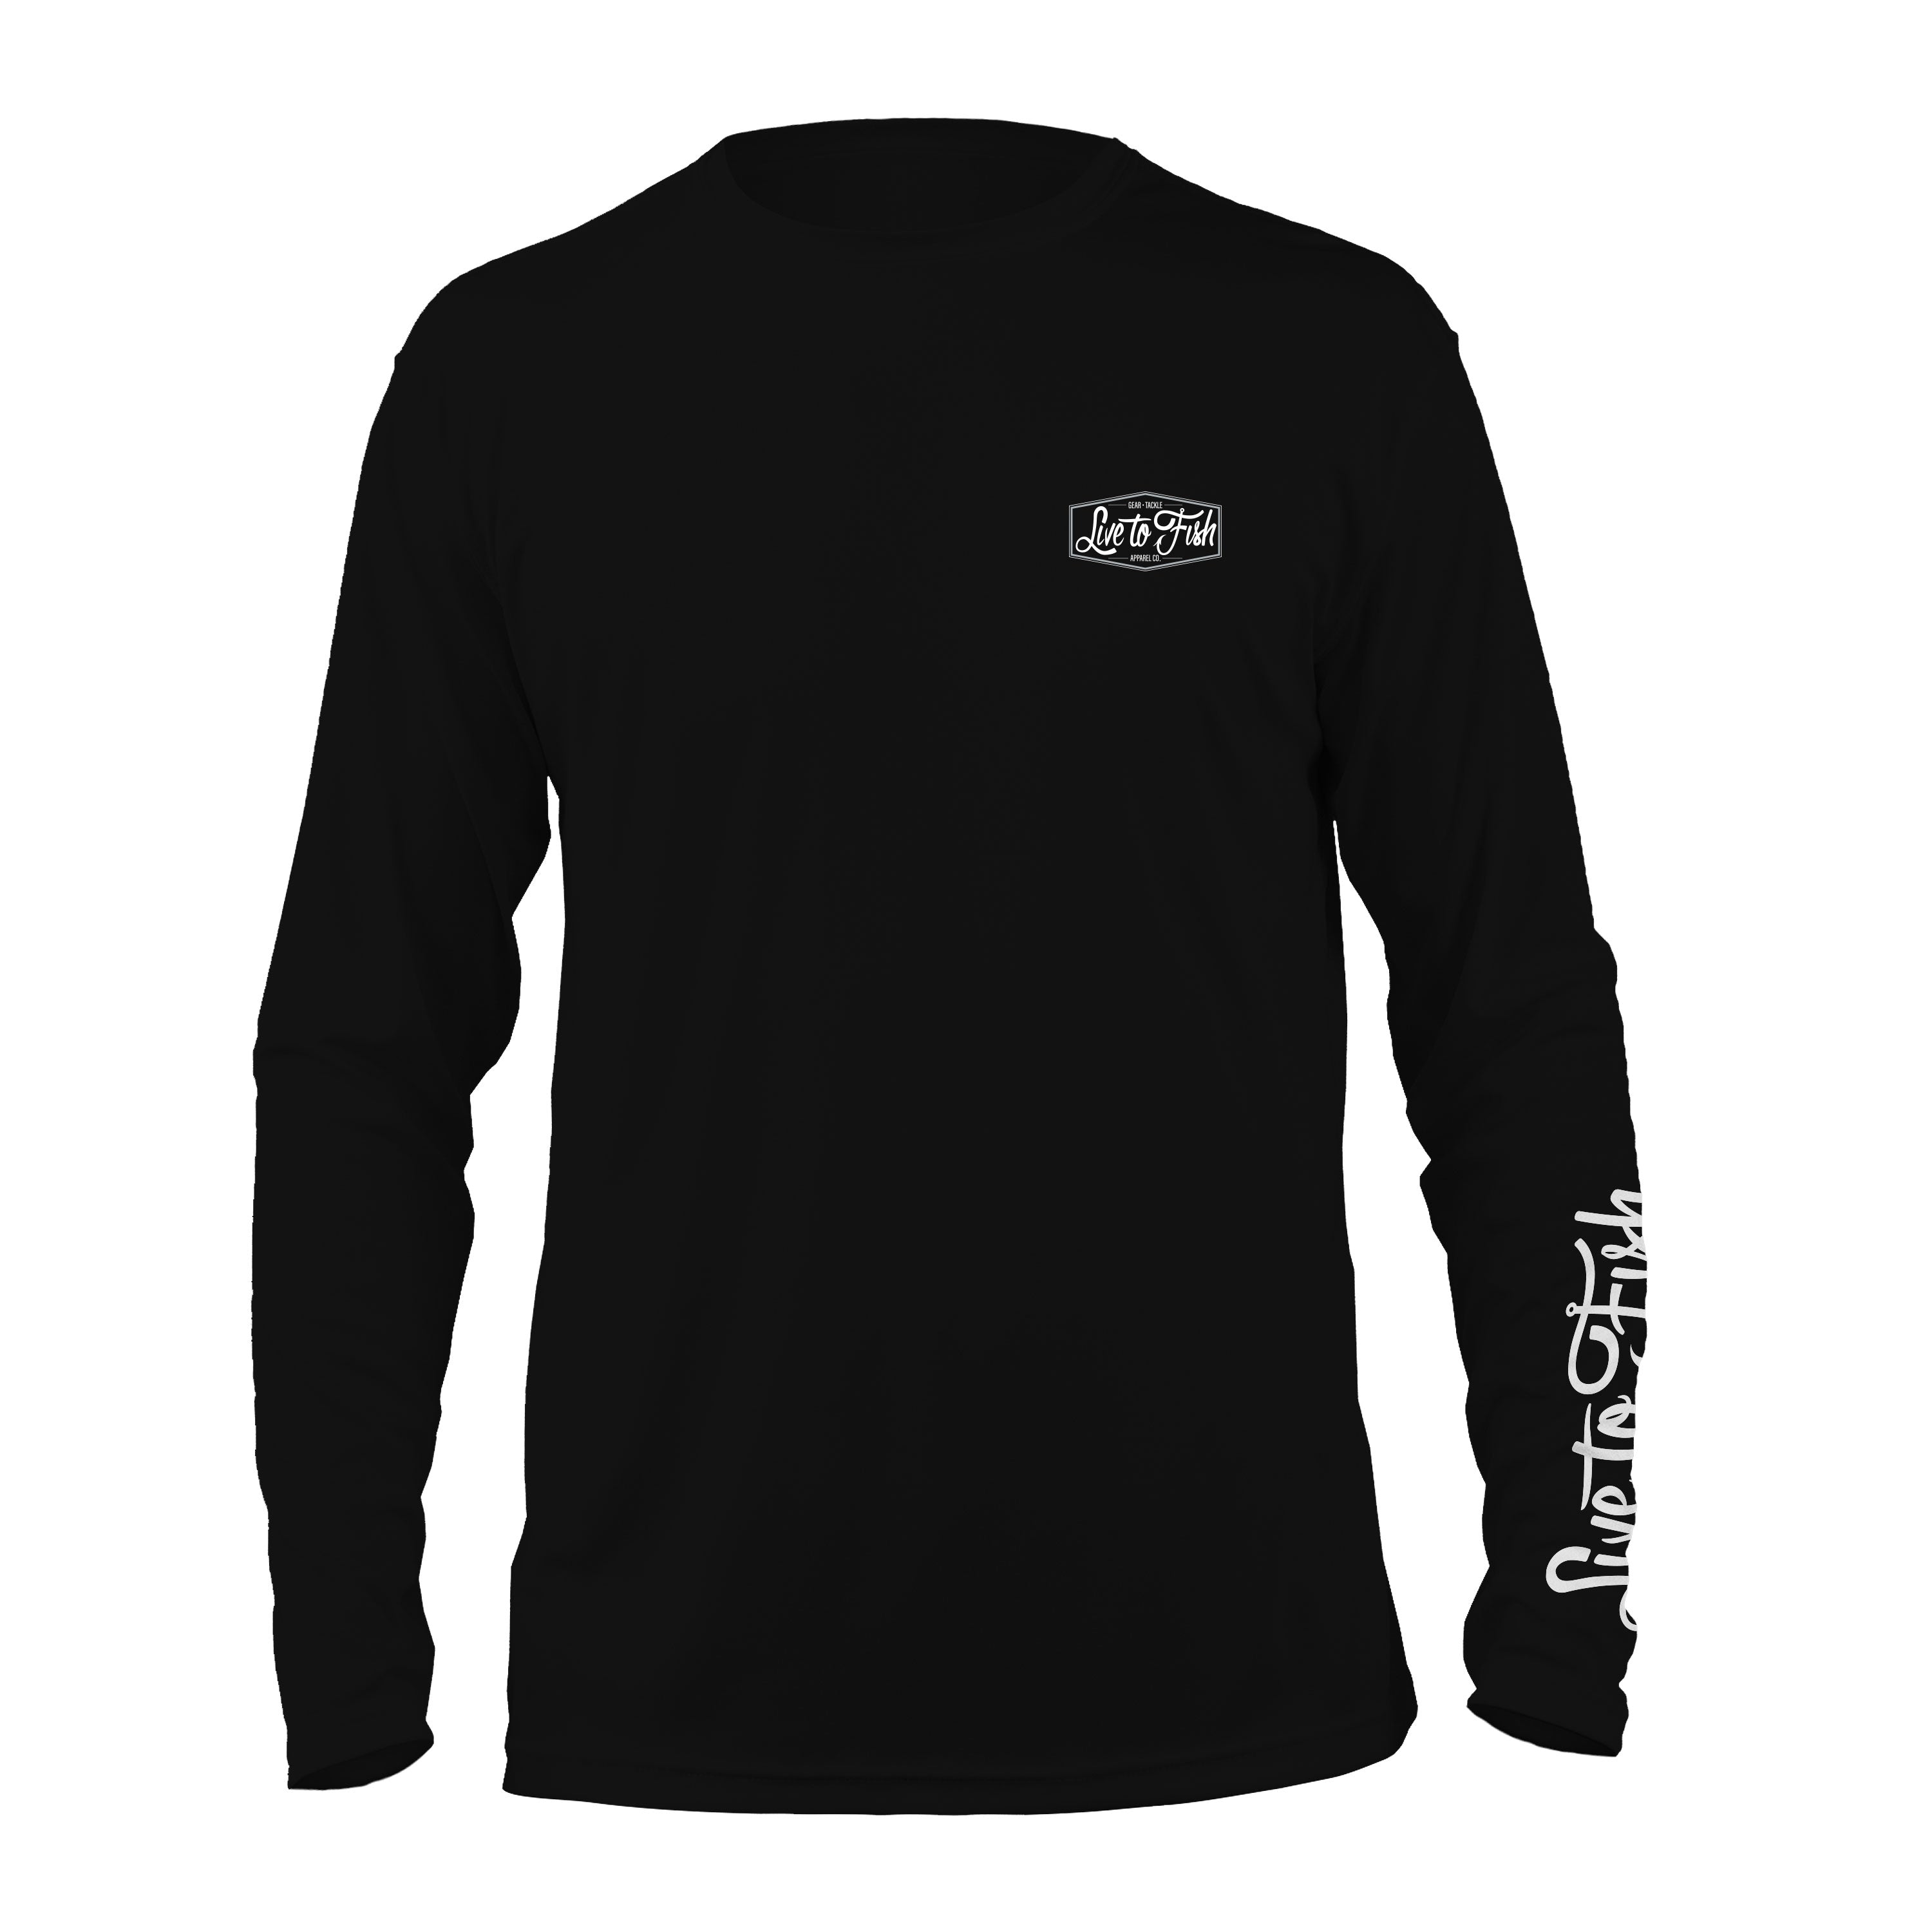 LTFFLA Established Floridian Long Sleeve UV Shirt, Black | Live to Fish